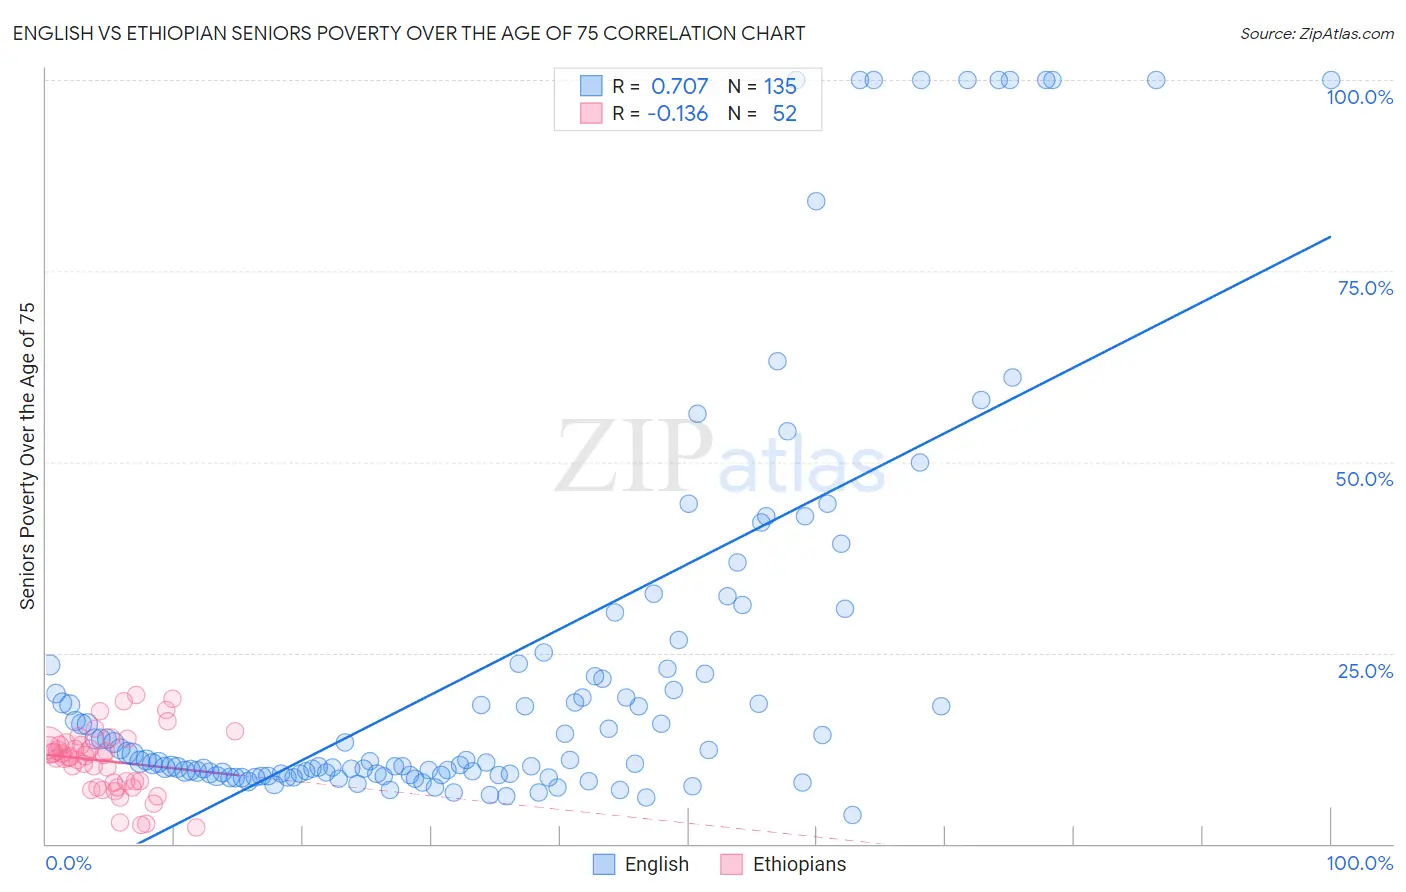 English vs Ethiopian Seniors Poverty Over the Age of 75